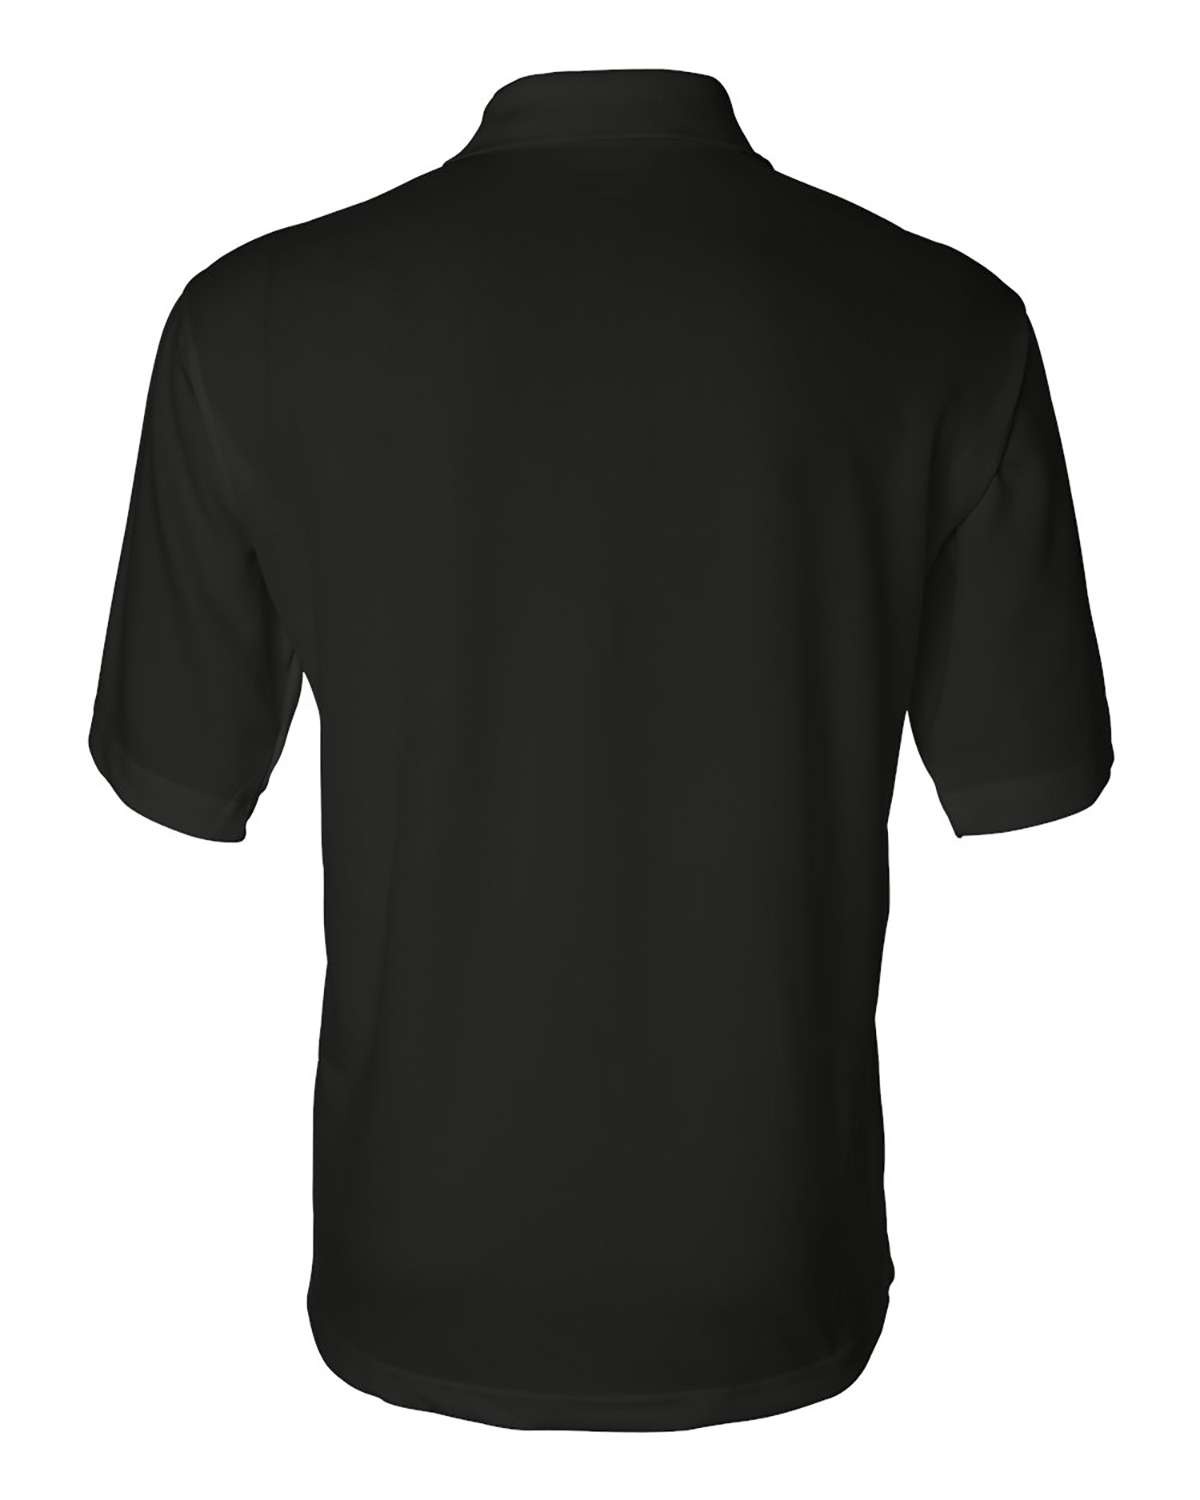 'Augusta Sportswear 5095 Adult Wicking Mesh Sport Shirt'